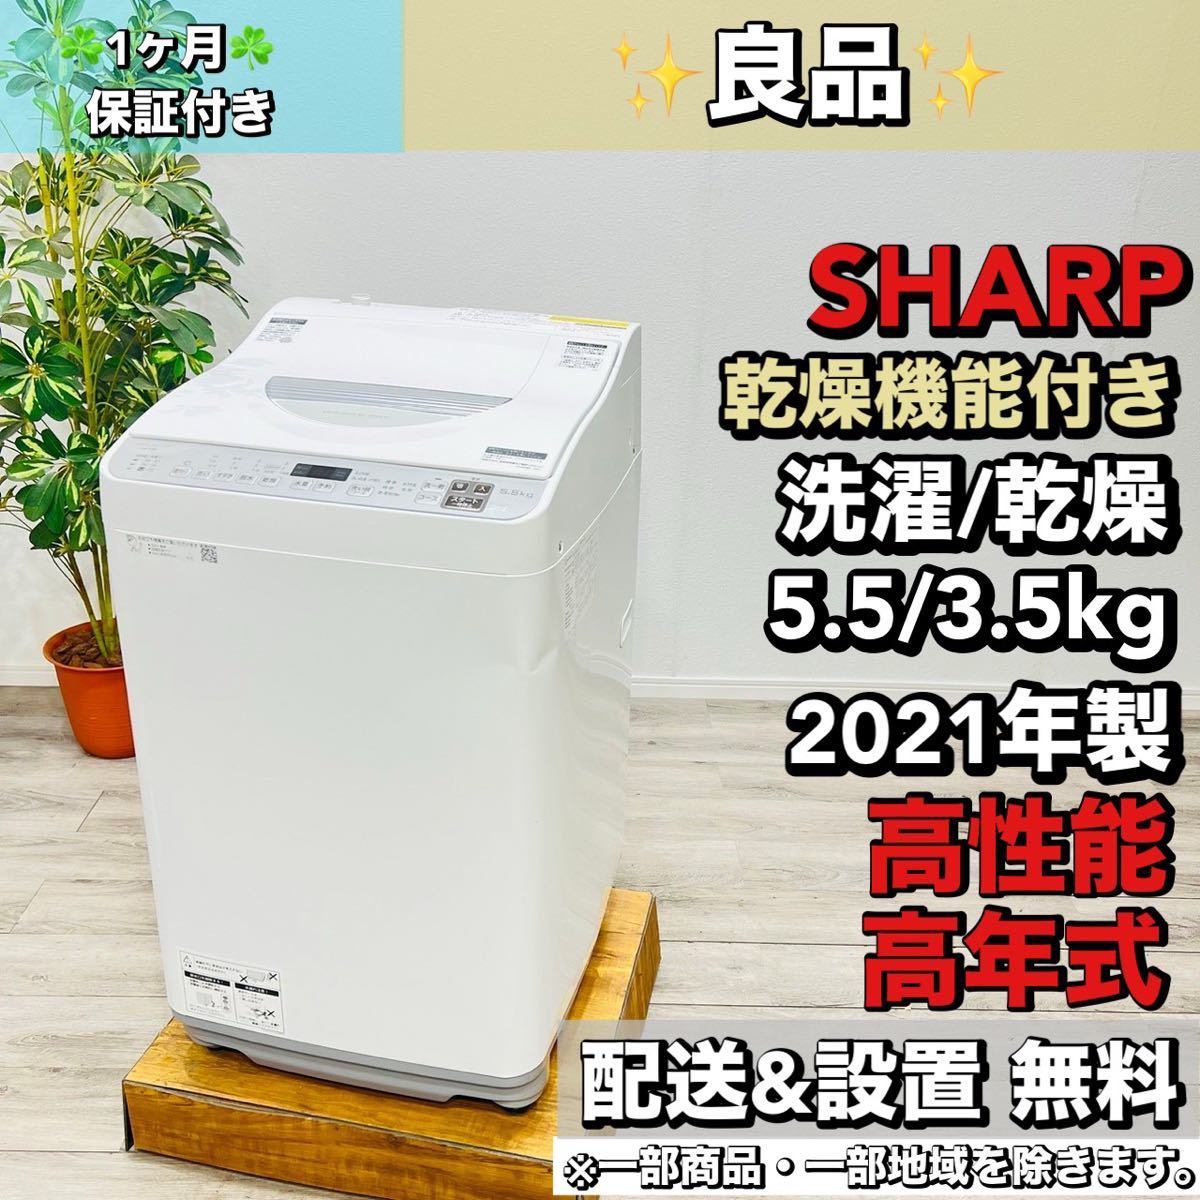 SHARP a1736 洗濯機 5.5kg 2021年製 3